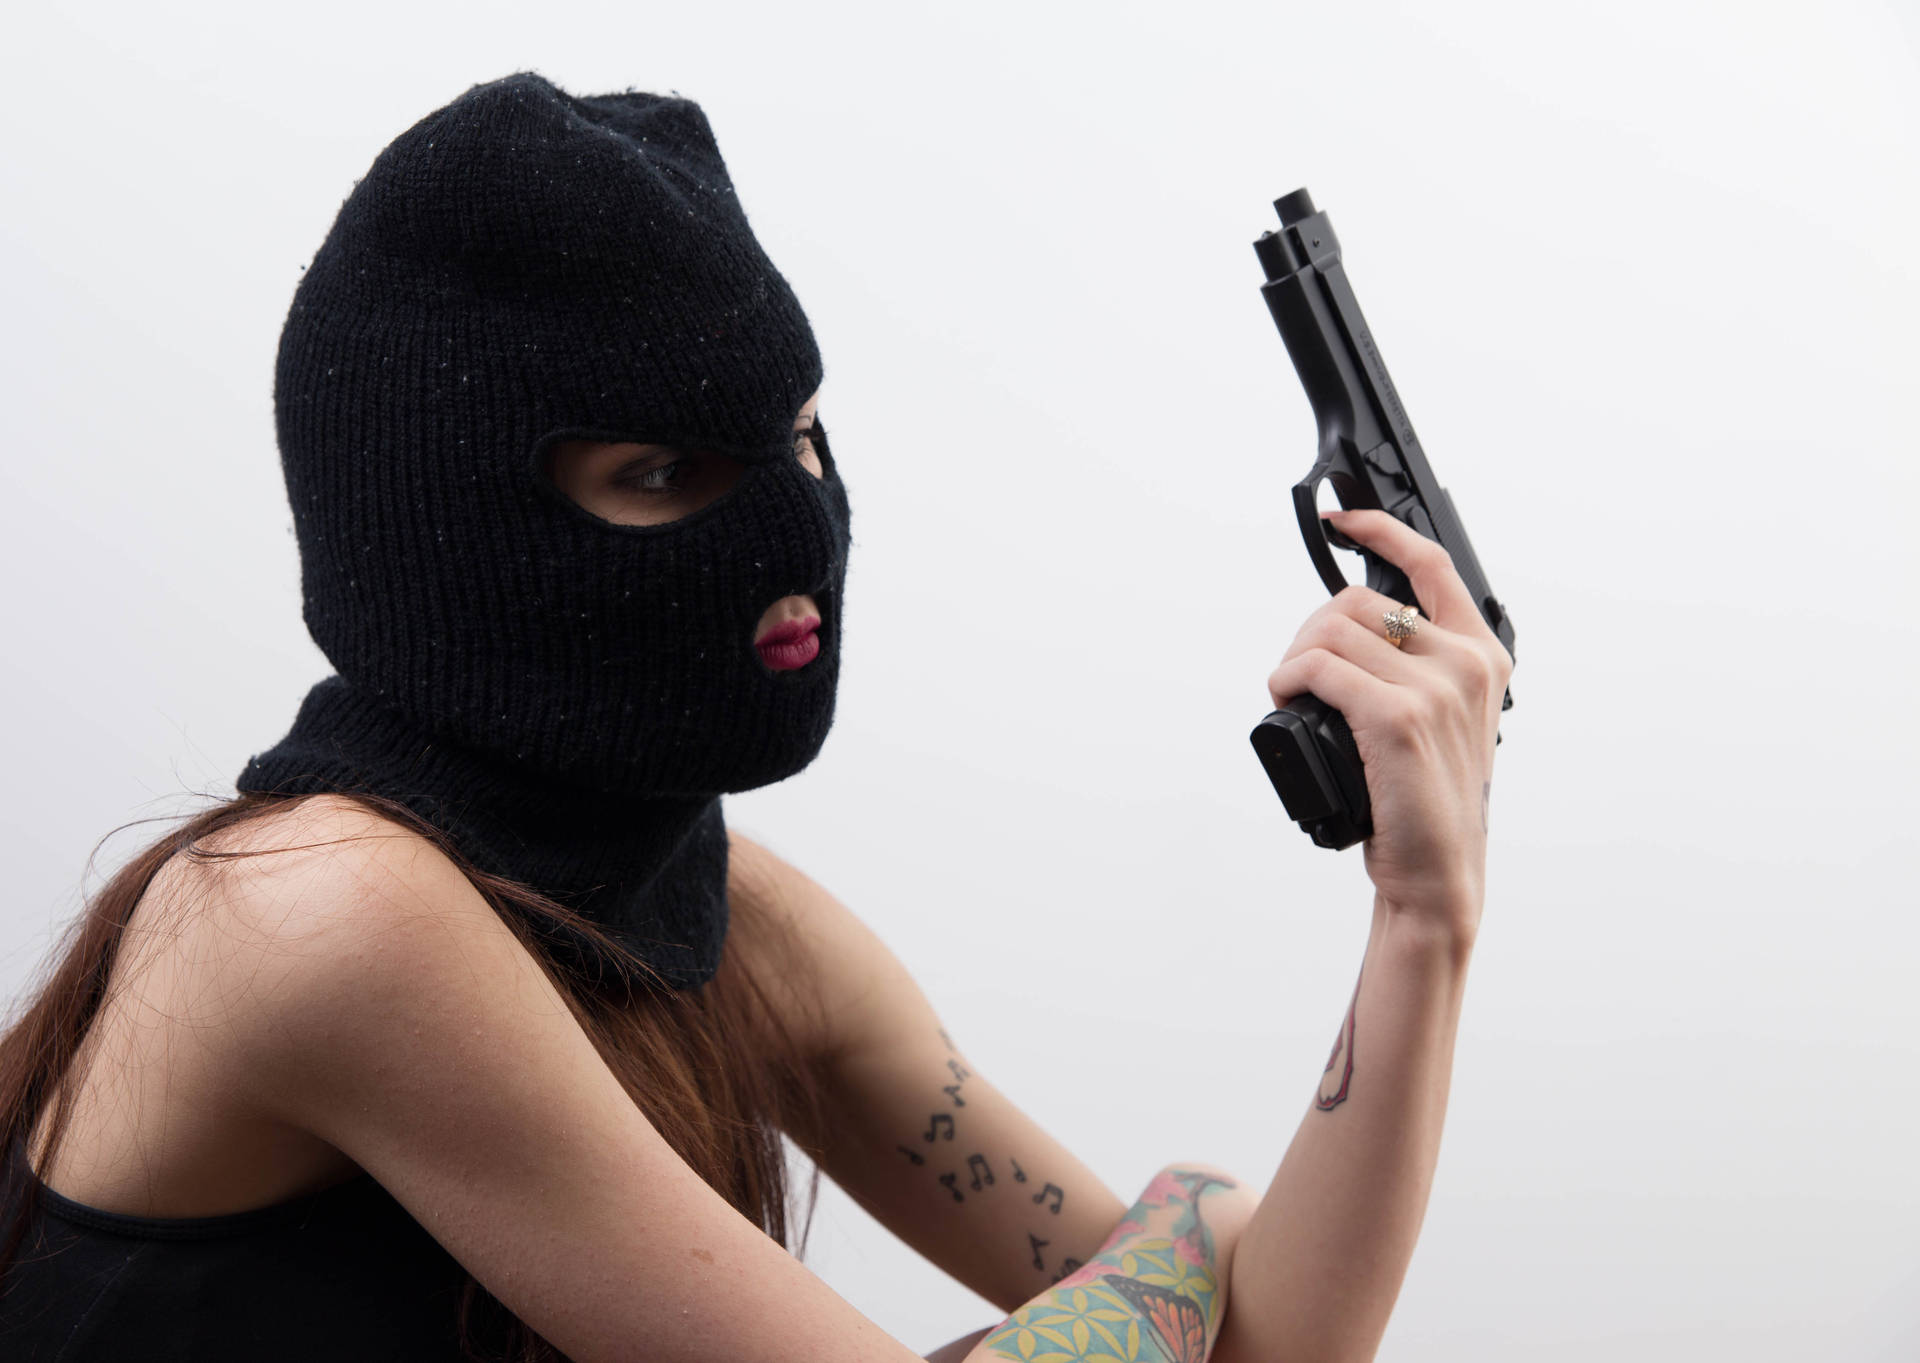 Masked Woman With A Gun